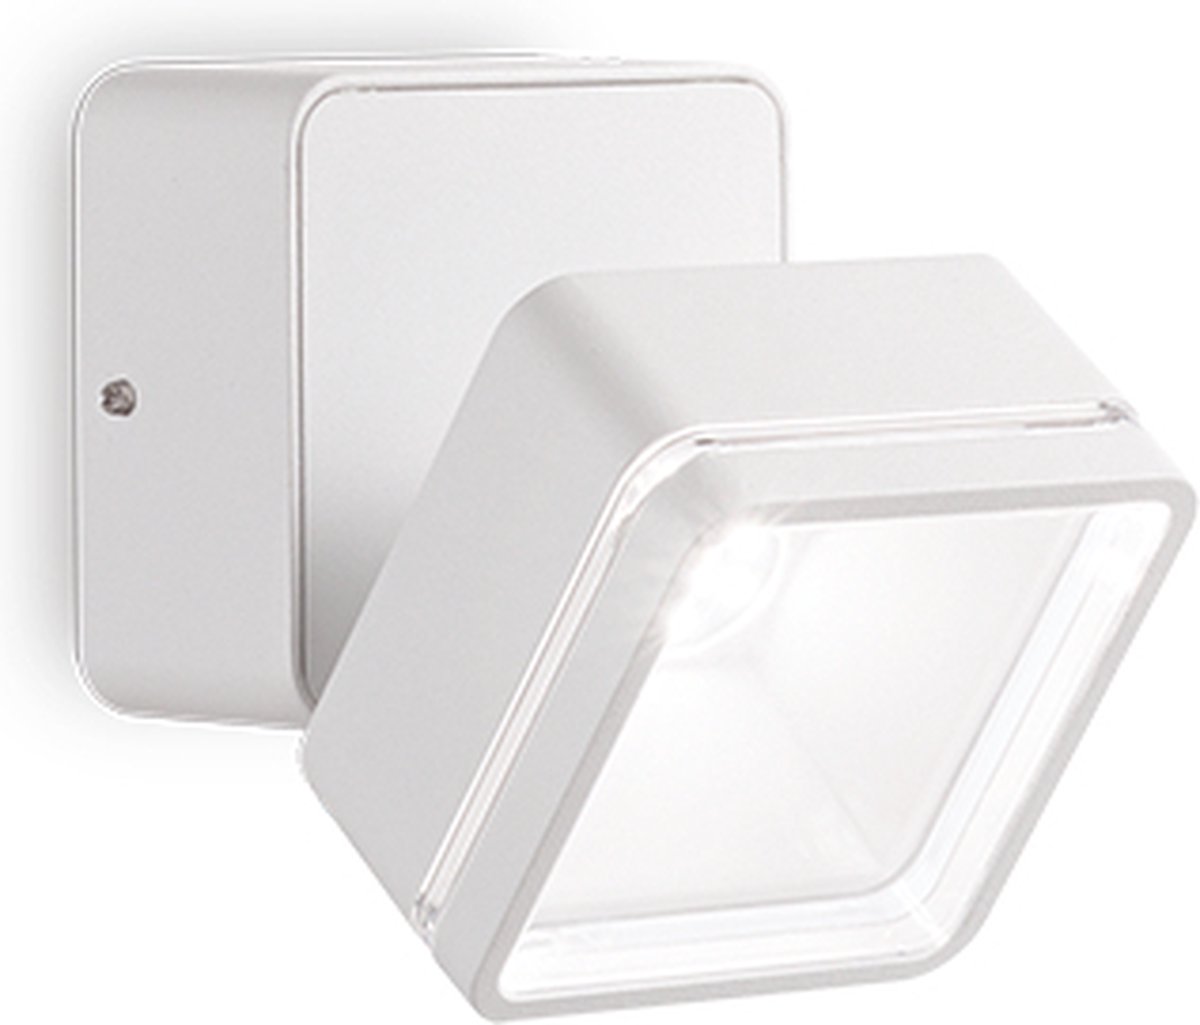 Ideal Lux - Omega square - Wandlamp - Metaal - LED - Wit - Voor binnen - Lampen - Woonkamer - Eetkamer - Keuken